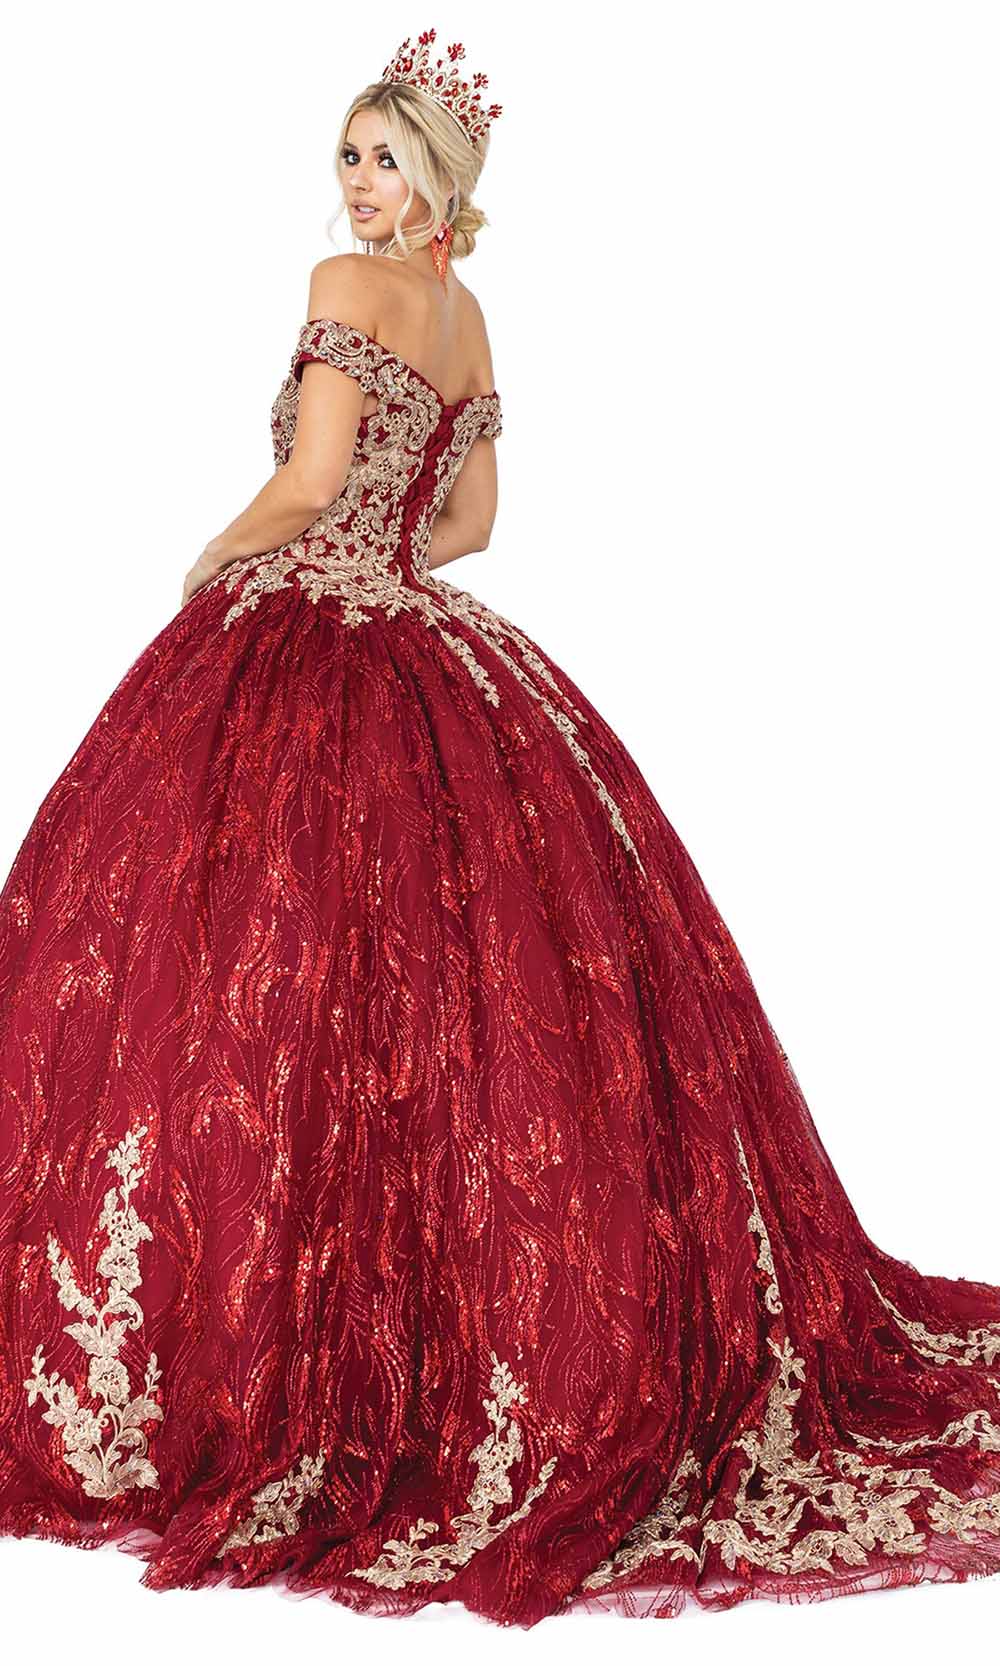 Dancing Queen - 1579 Lace Appliqued Ballgown In Burgundy